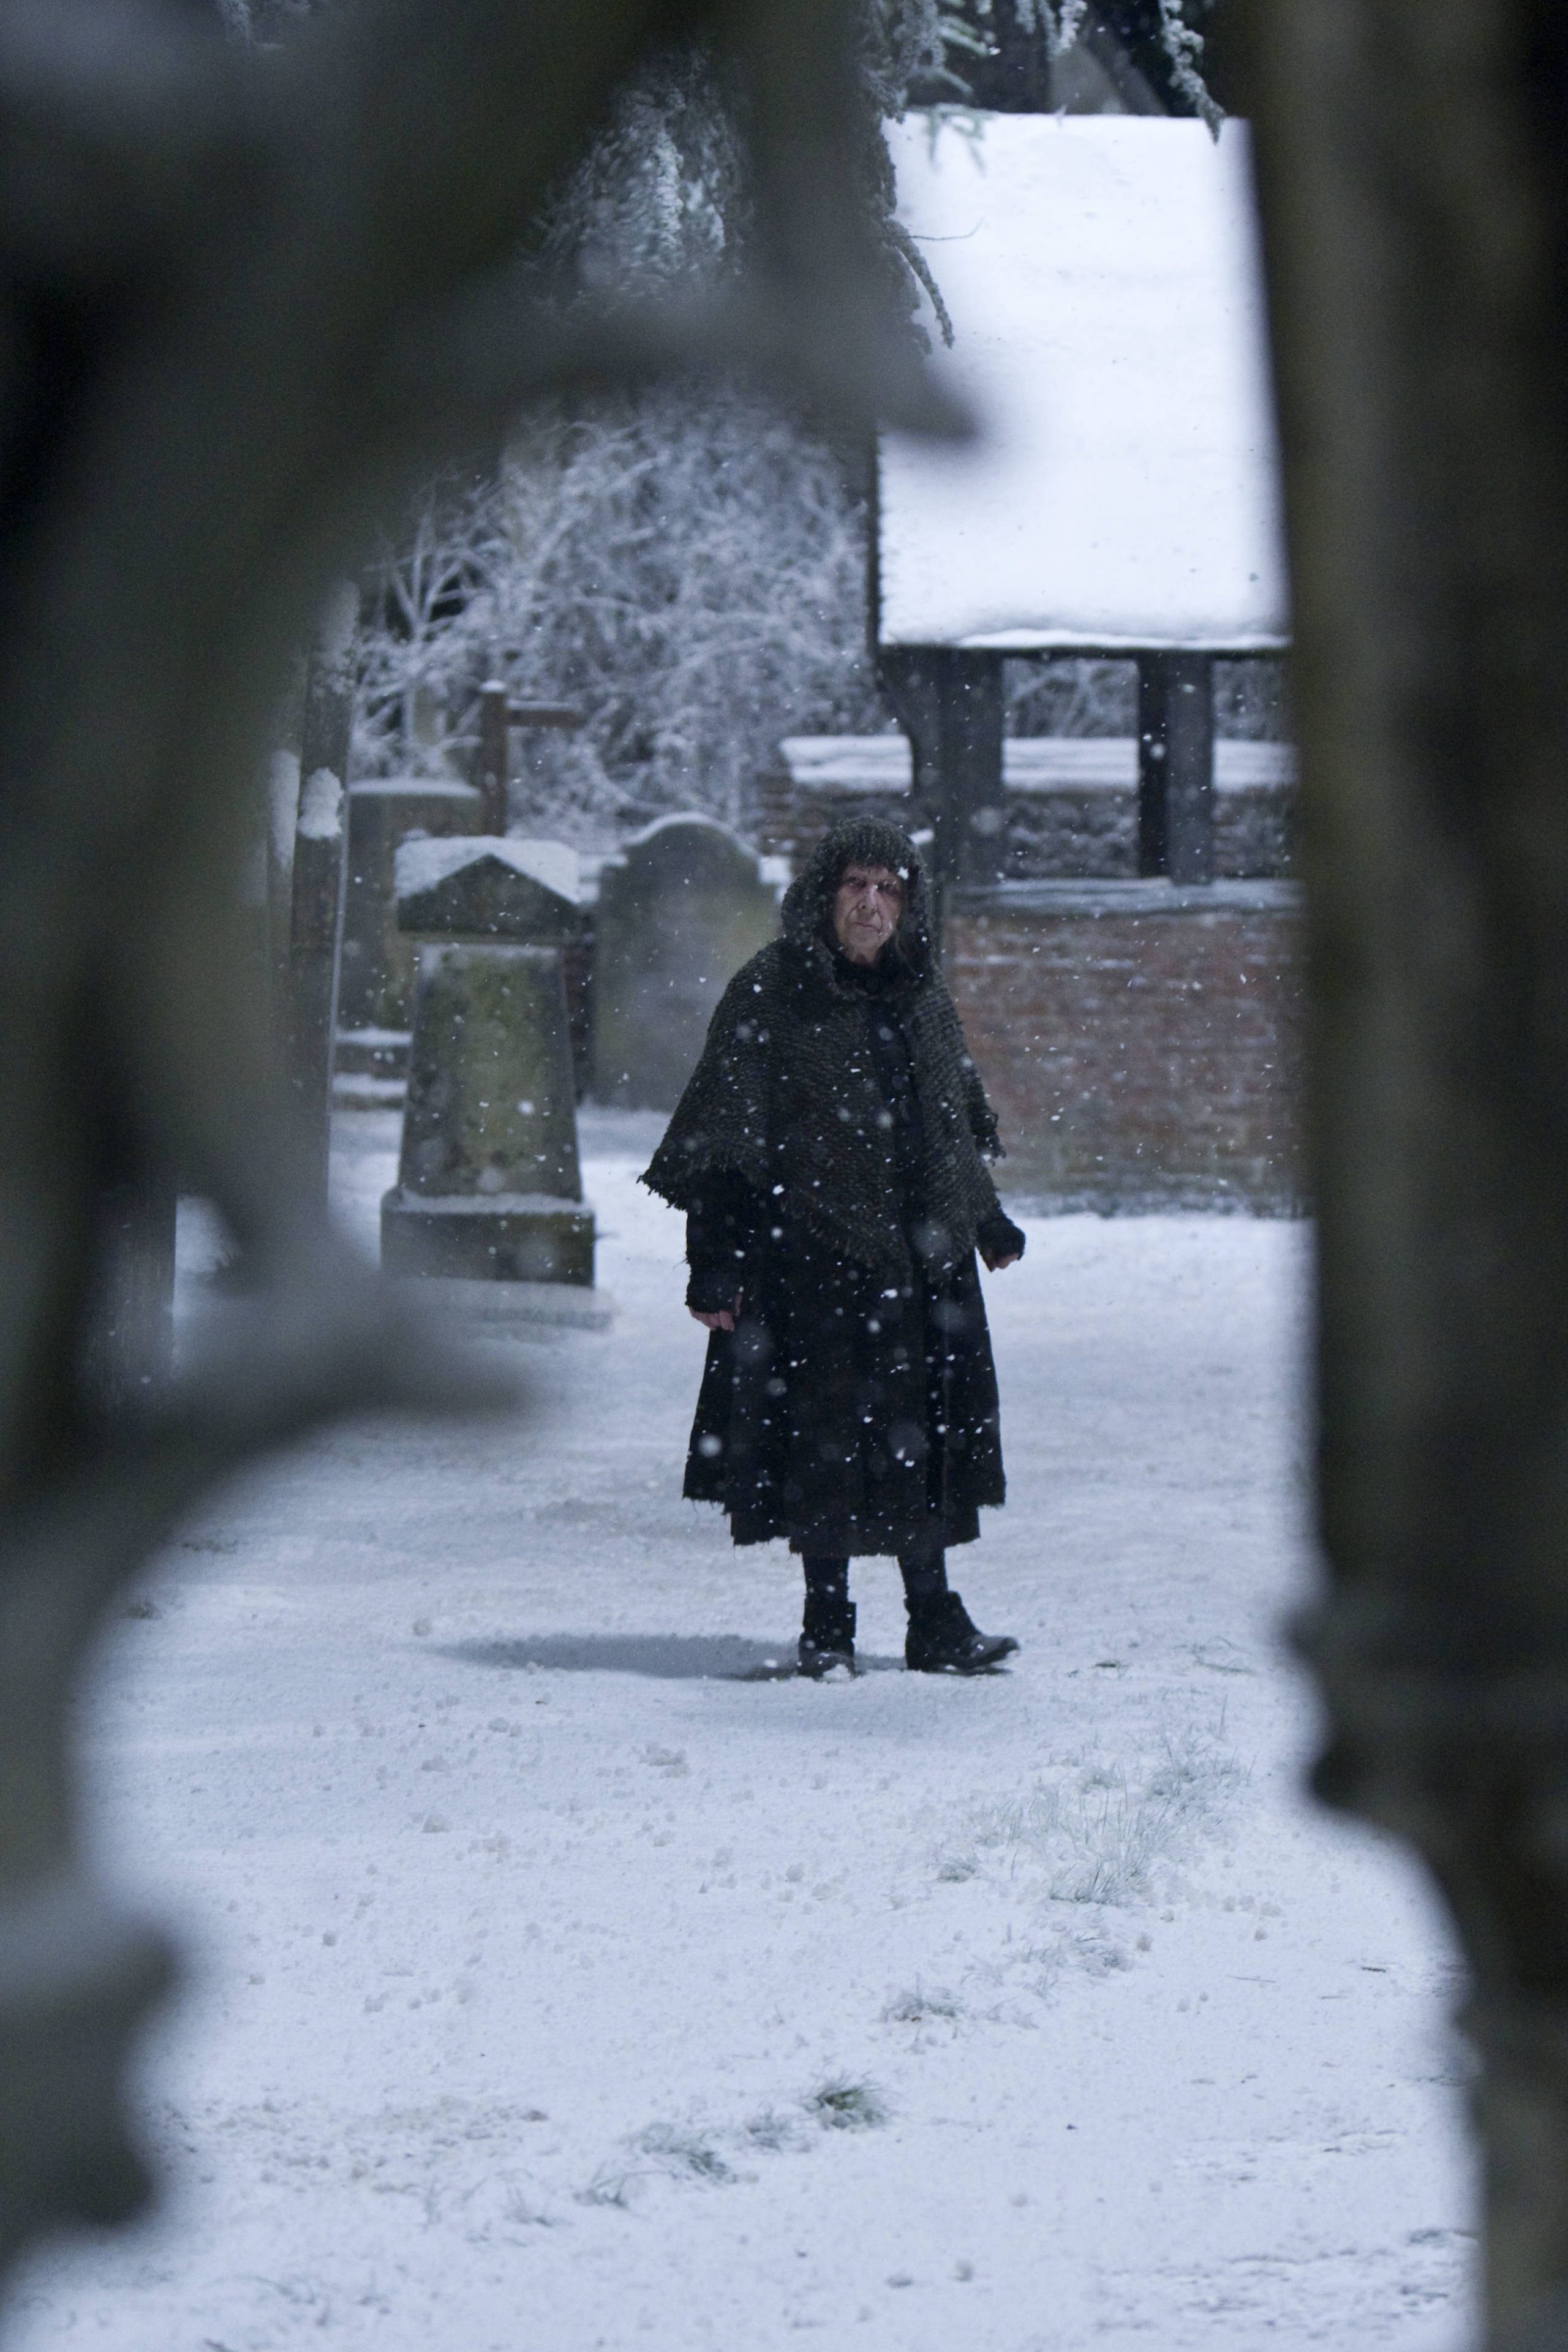 Film still of Bathilda Bagshot in Godric's Hollow